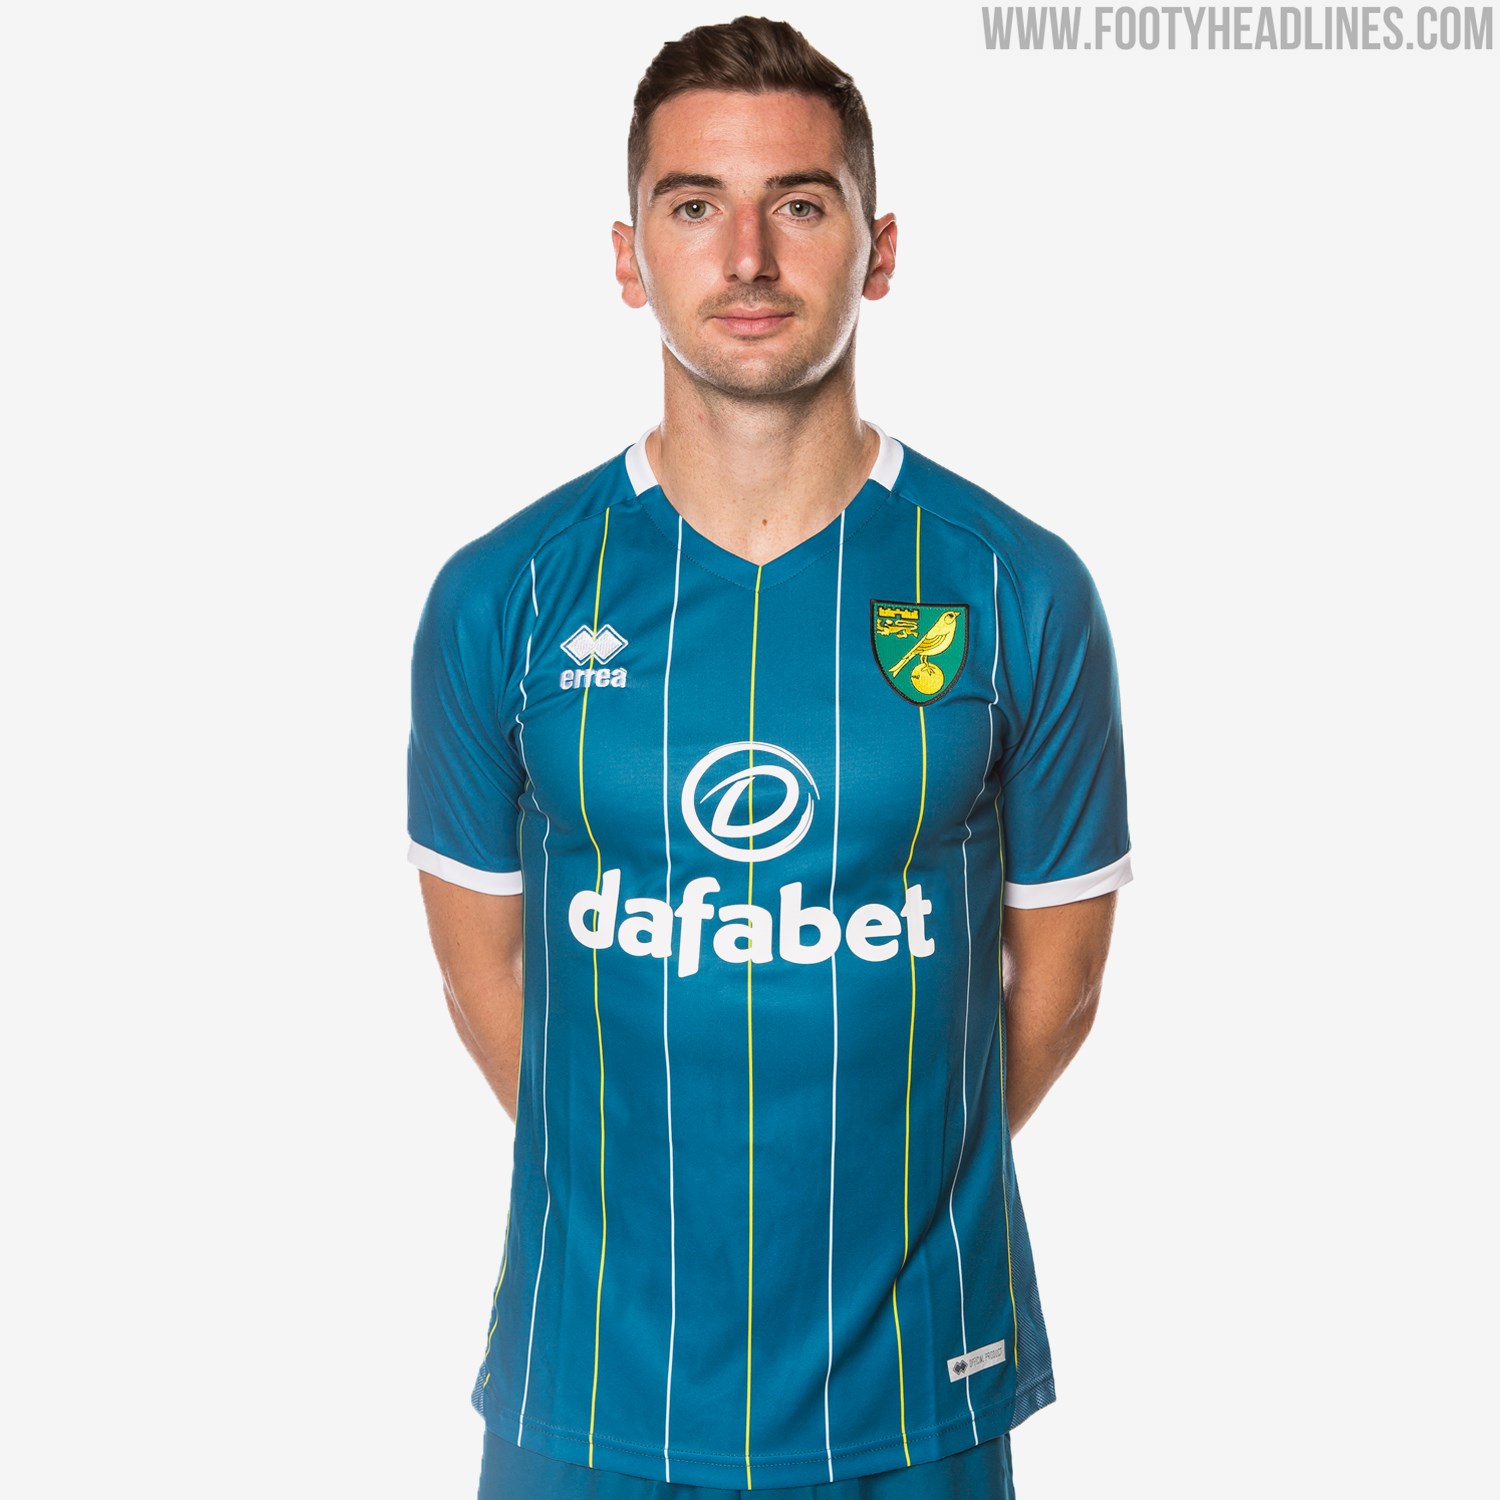 Norwich City launch third kit for 2020-21 season - Norwich City